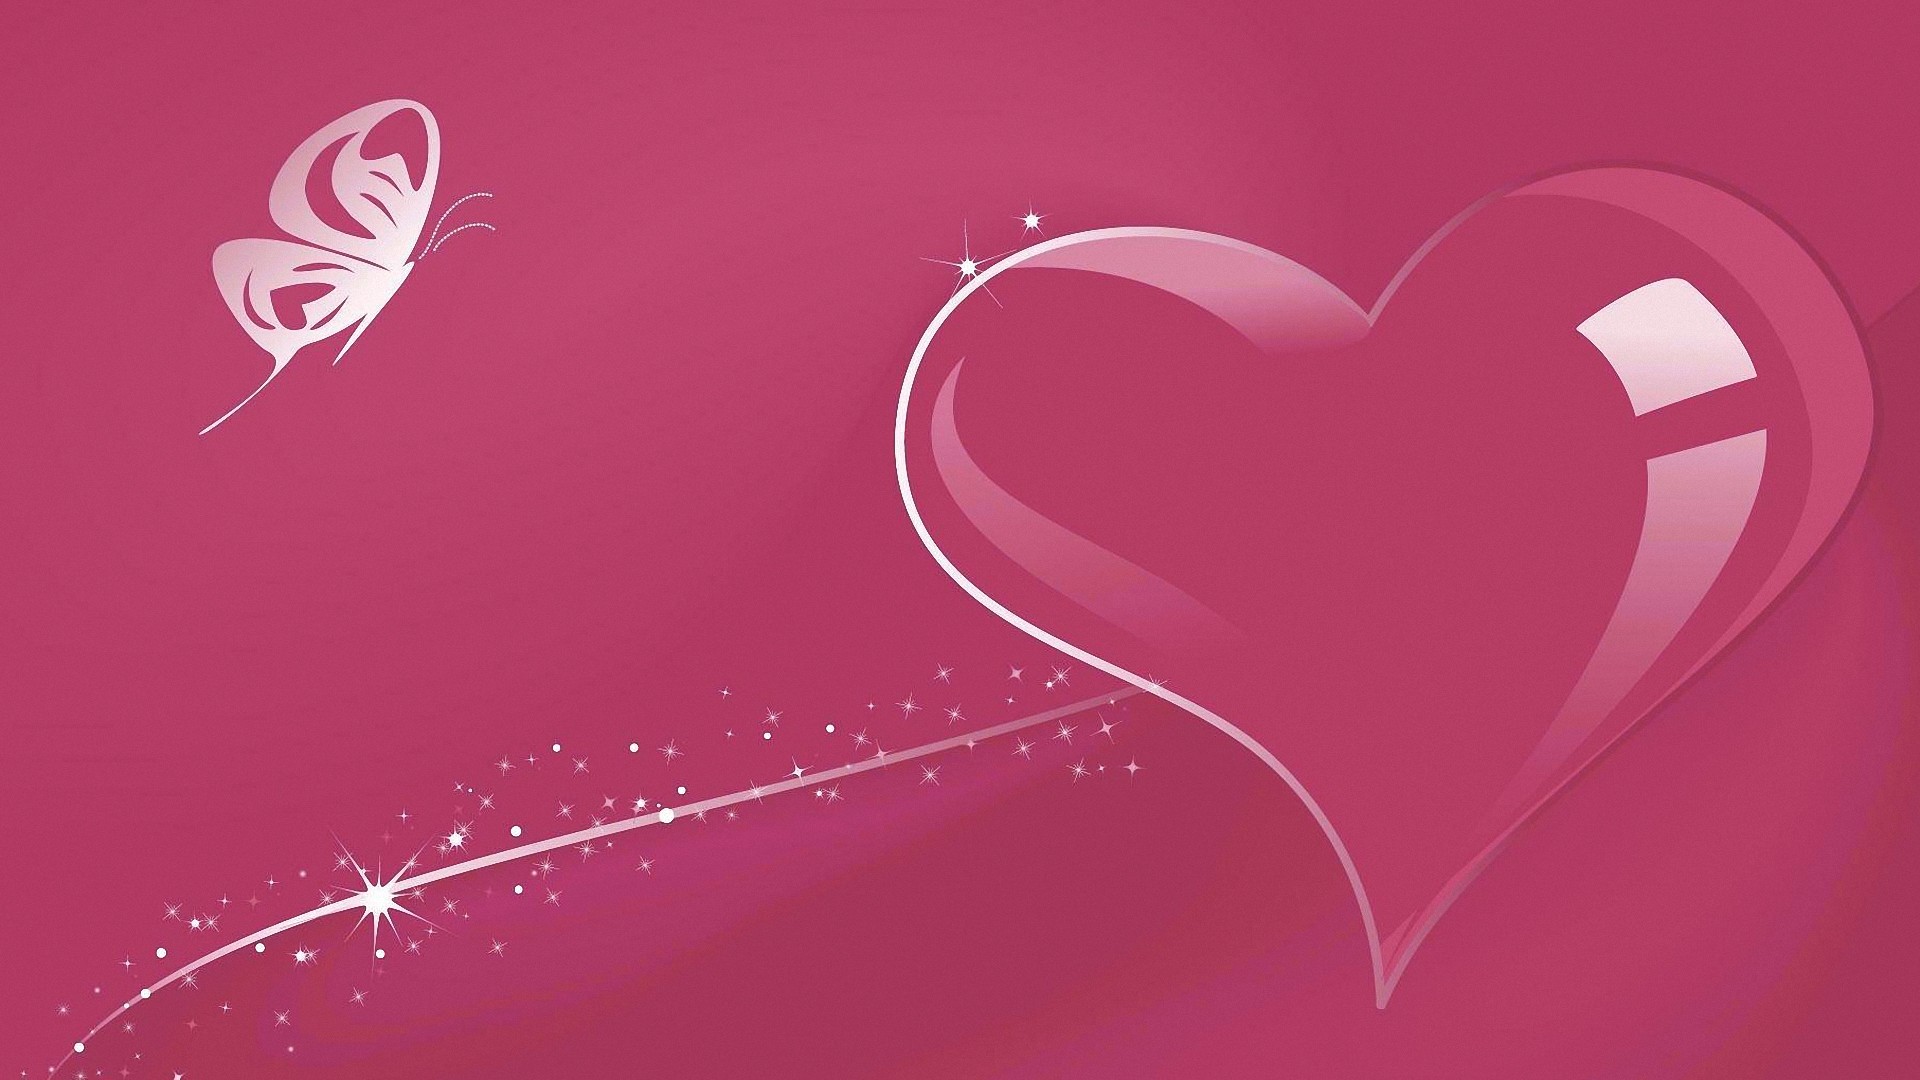 1920x1080, Glass Heart Pink Love Wallpapers Full Hd - Love Hd Background Wallpapers  1080p - 1920x1080 Wallpaper 